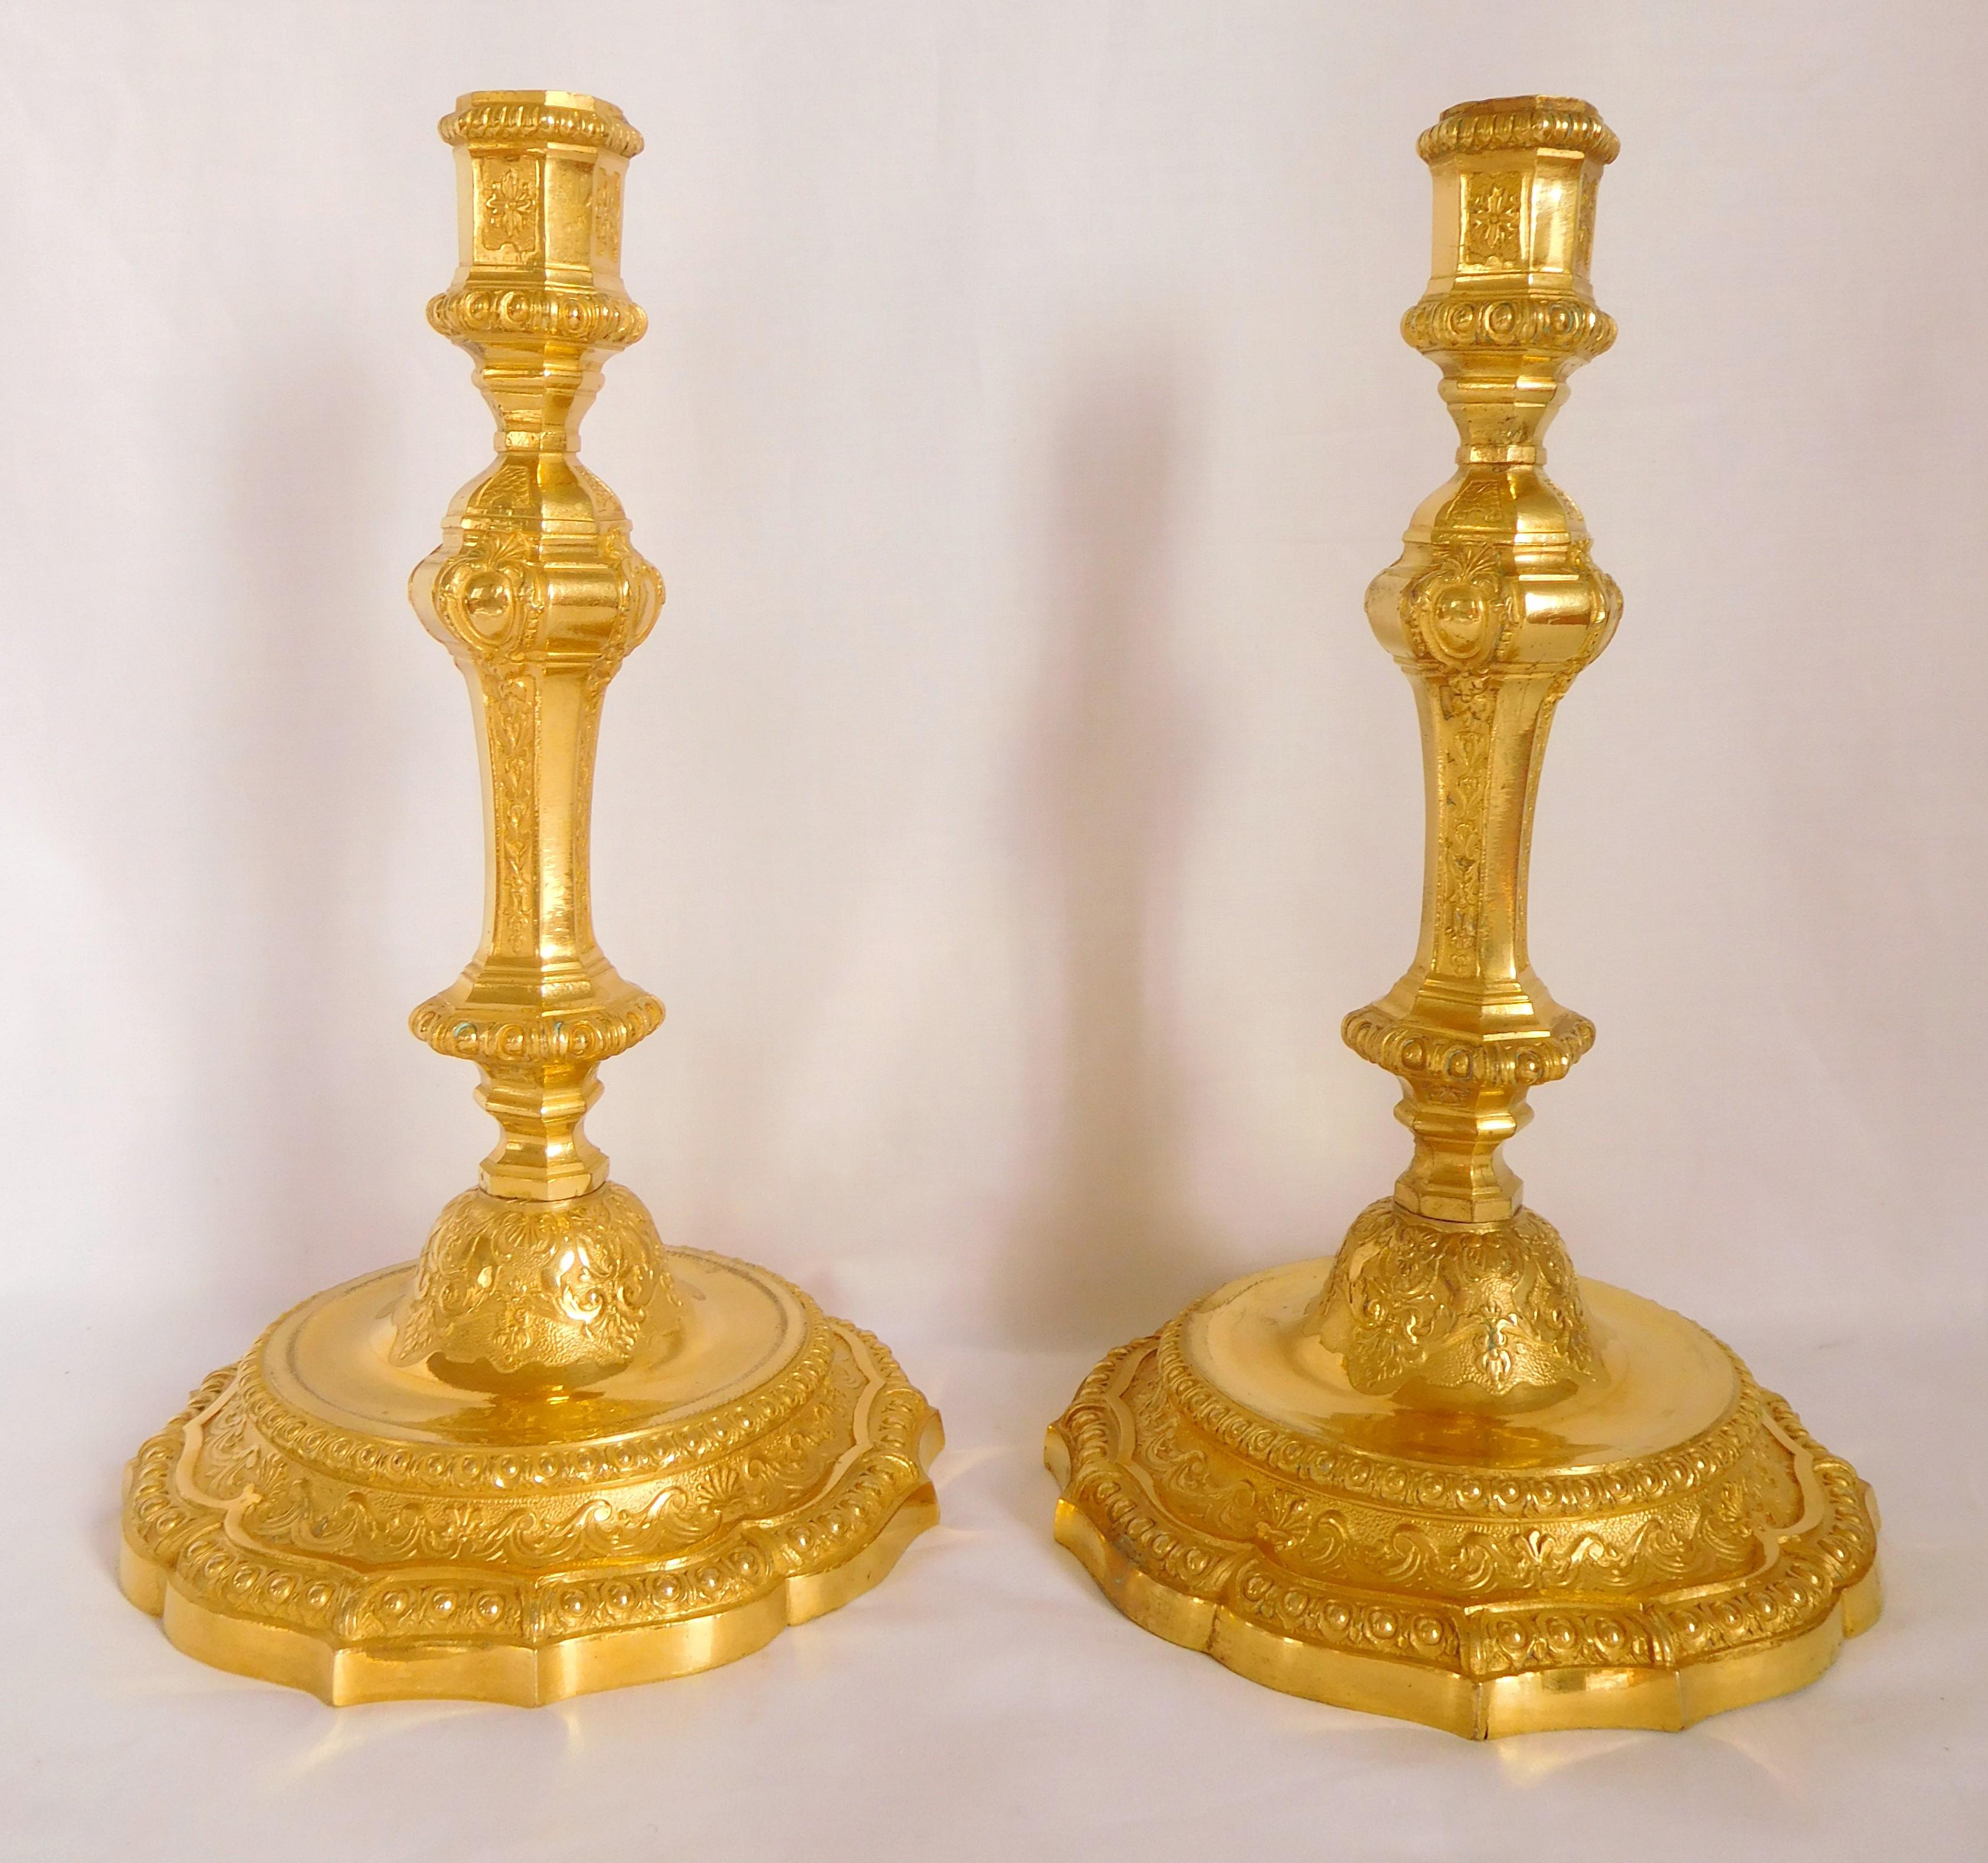 Regency Pair of Louis XIV style bronze - ormolu candlesticks - 19th century